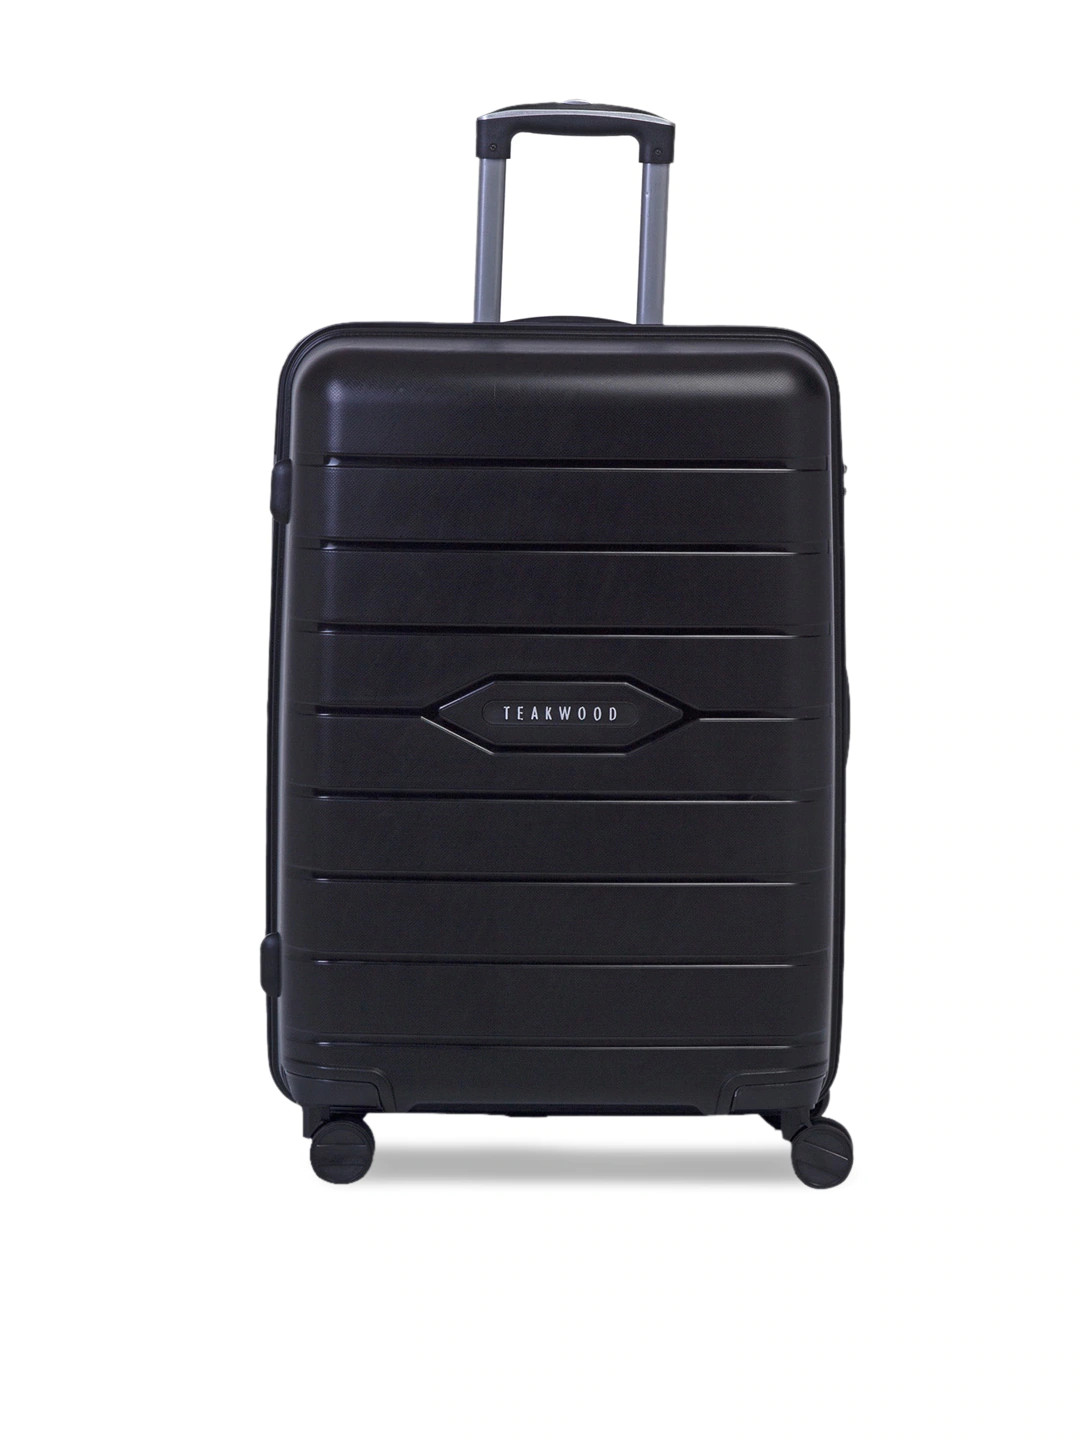 Teakwood Leathers Black Textured Hard-Sided Cabin Trolley Suitcase